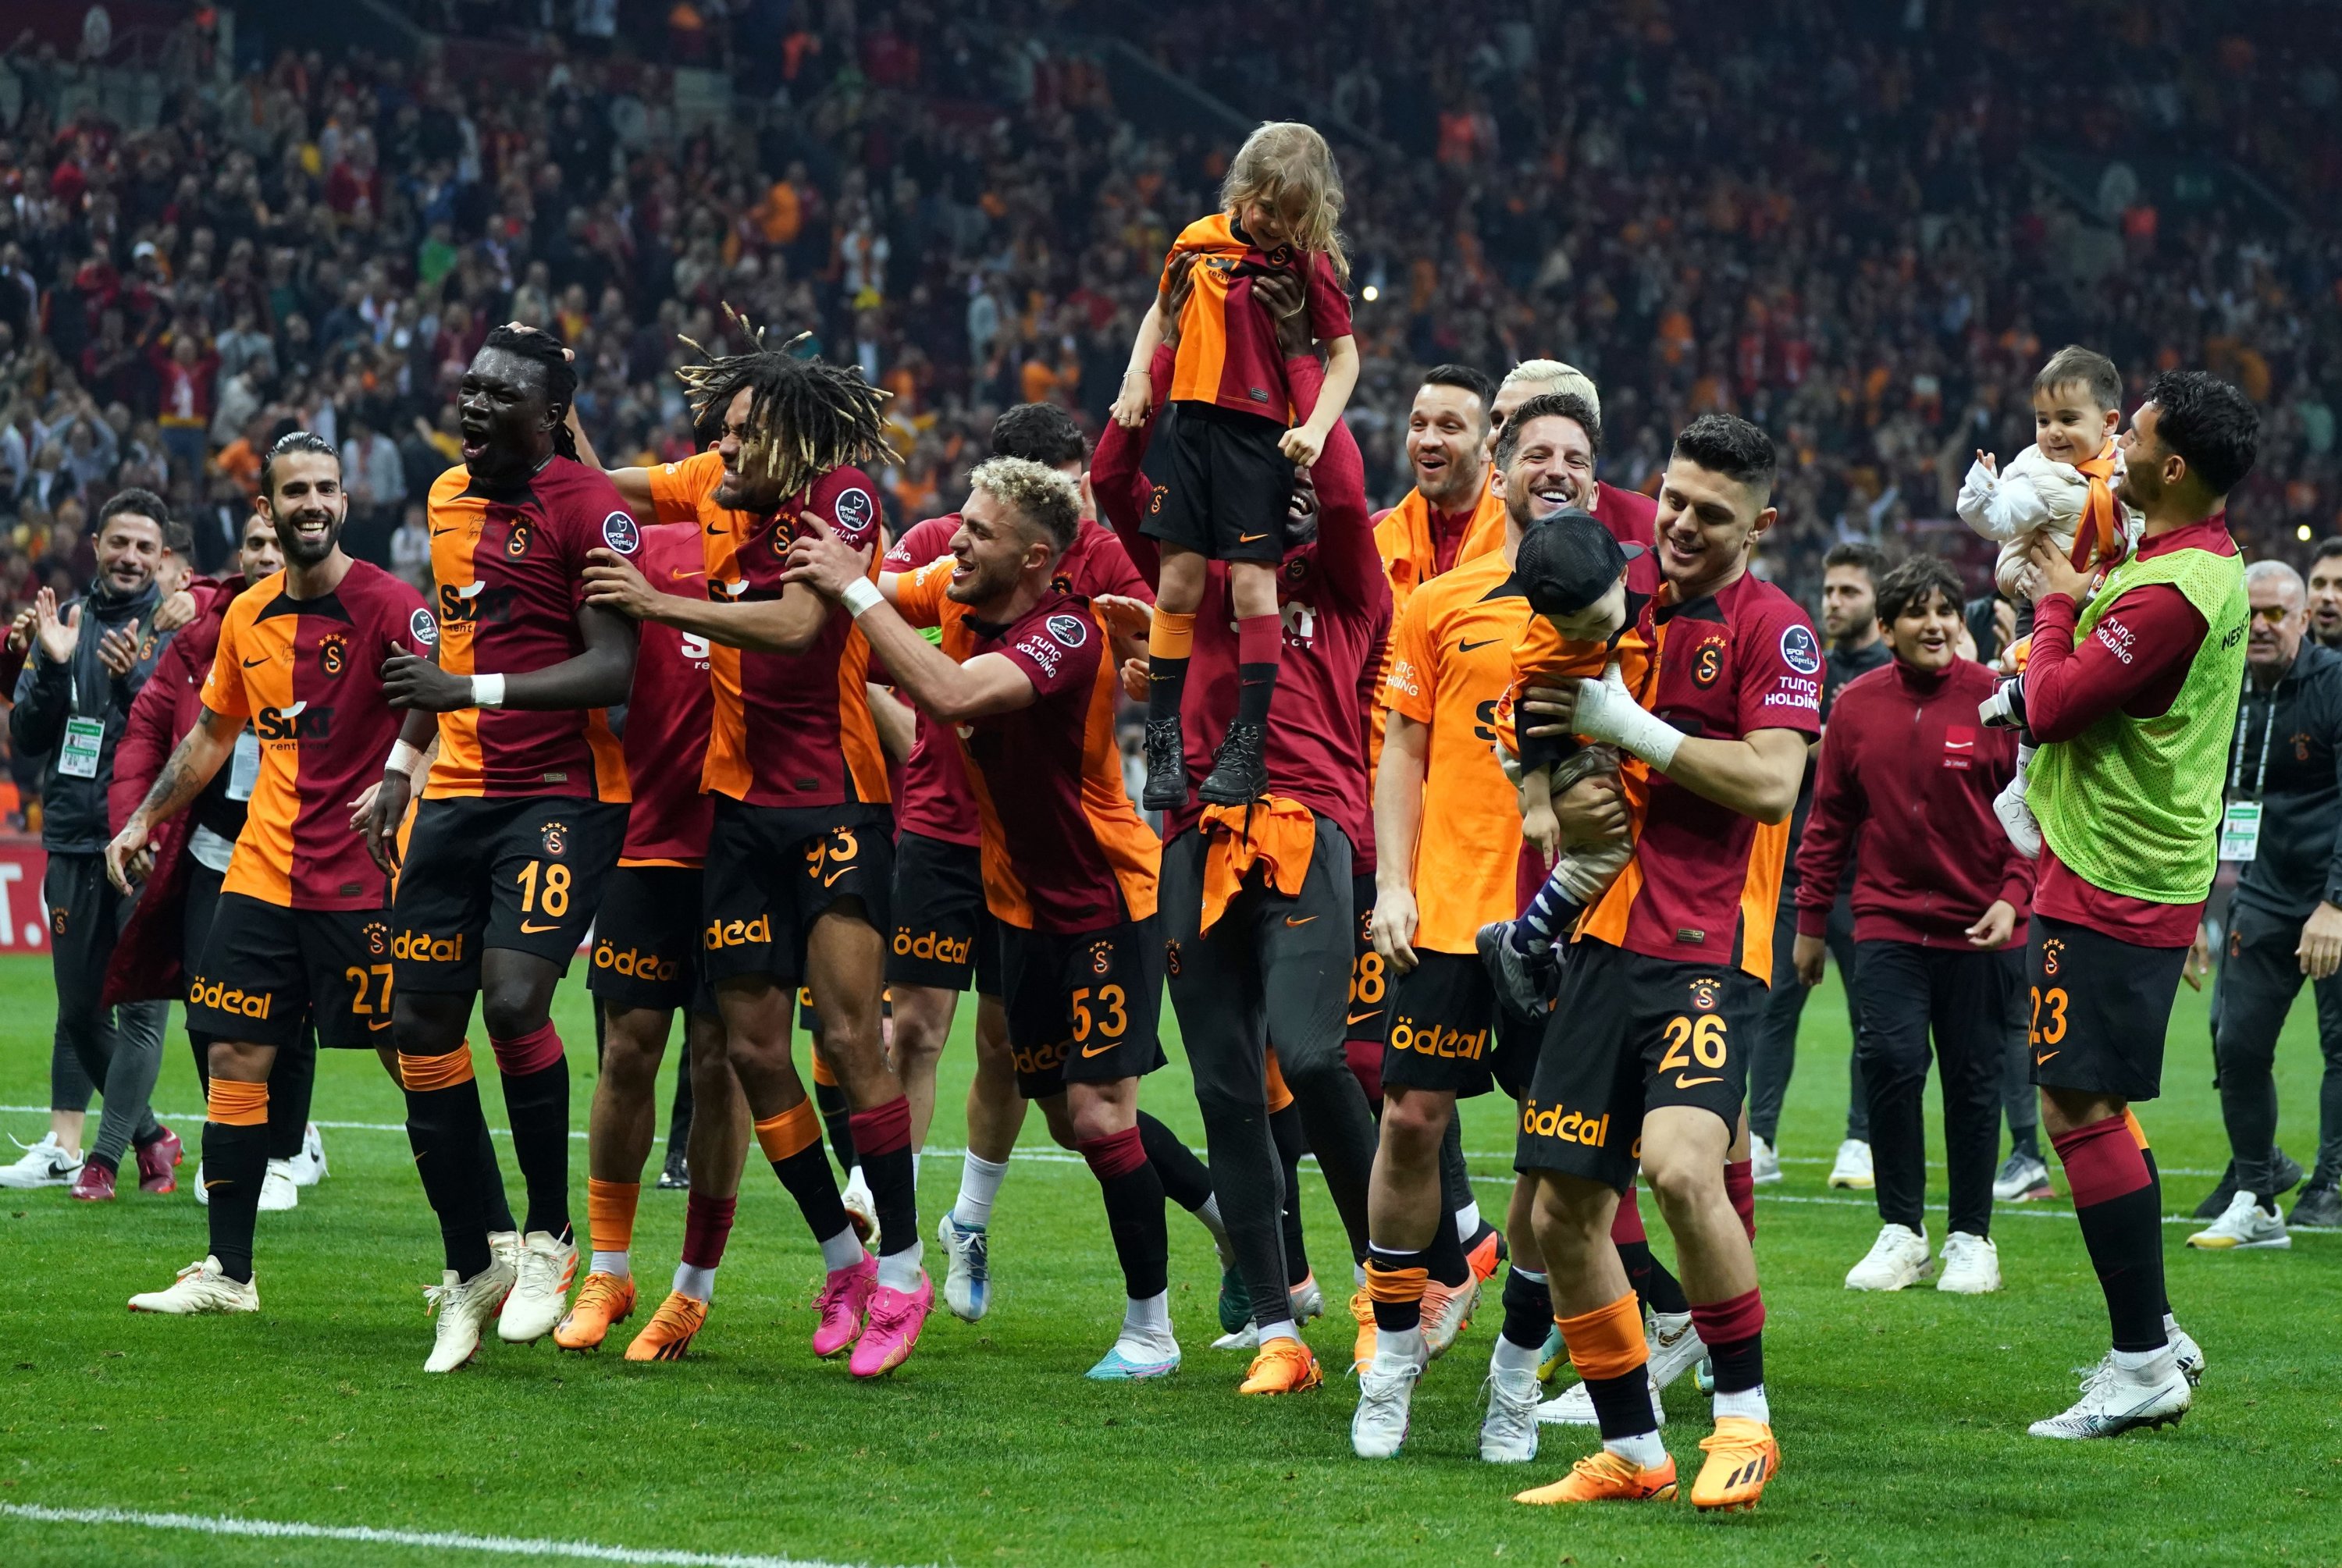 $27.5M at stake as Galatasaray set sights on Champions League spot